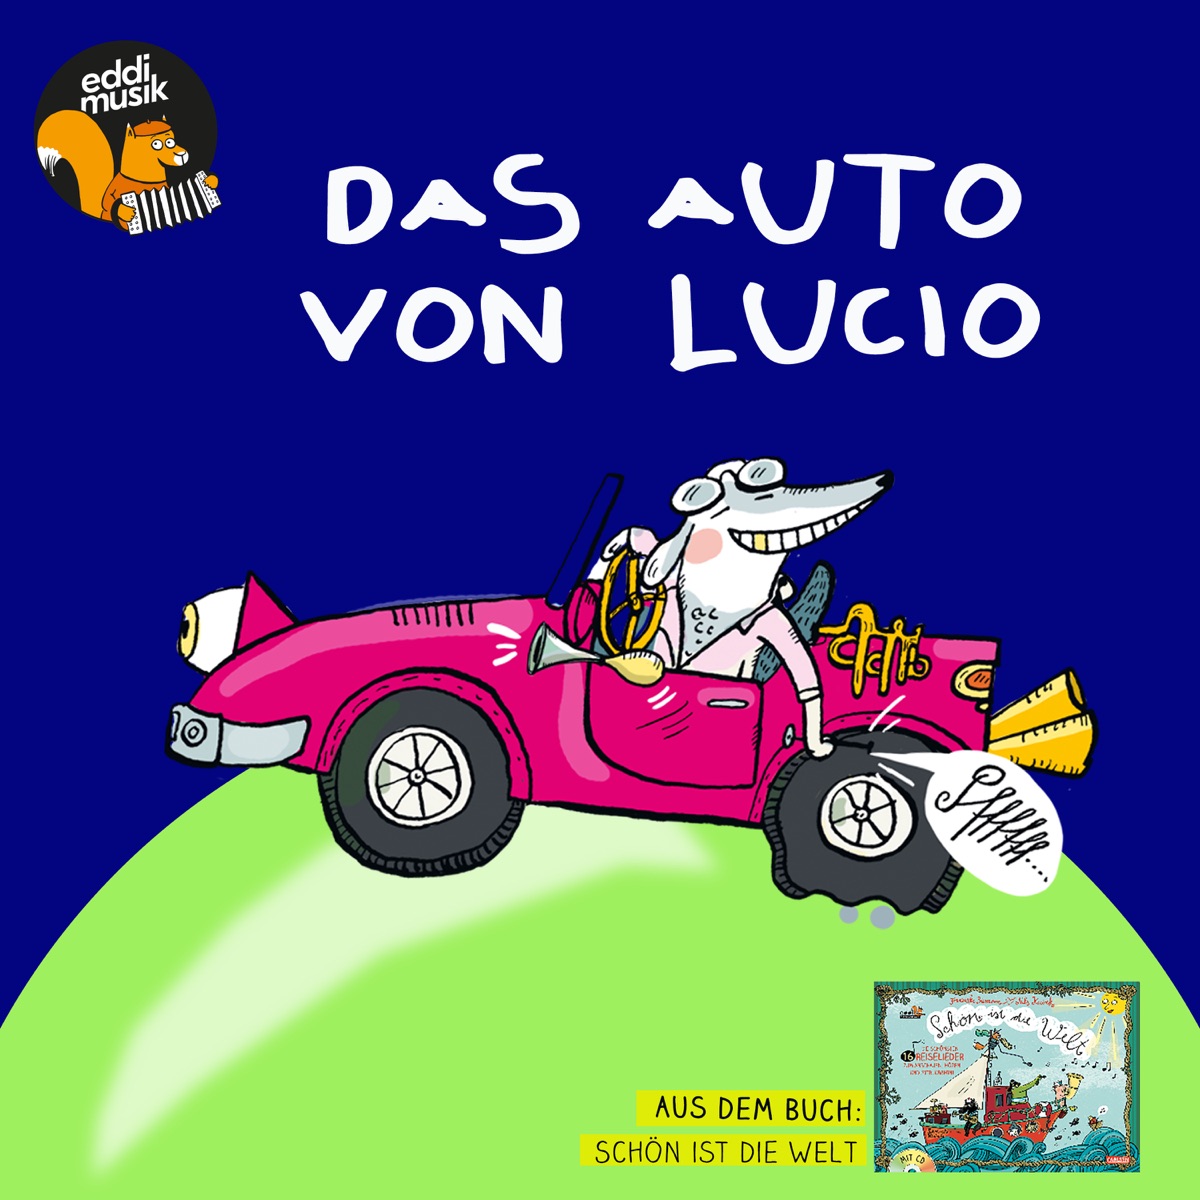 Das Auto von Lucio - Single - Album by Eddi Musik - Apple Music